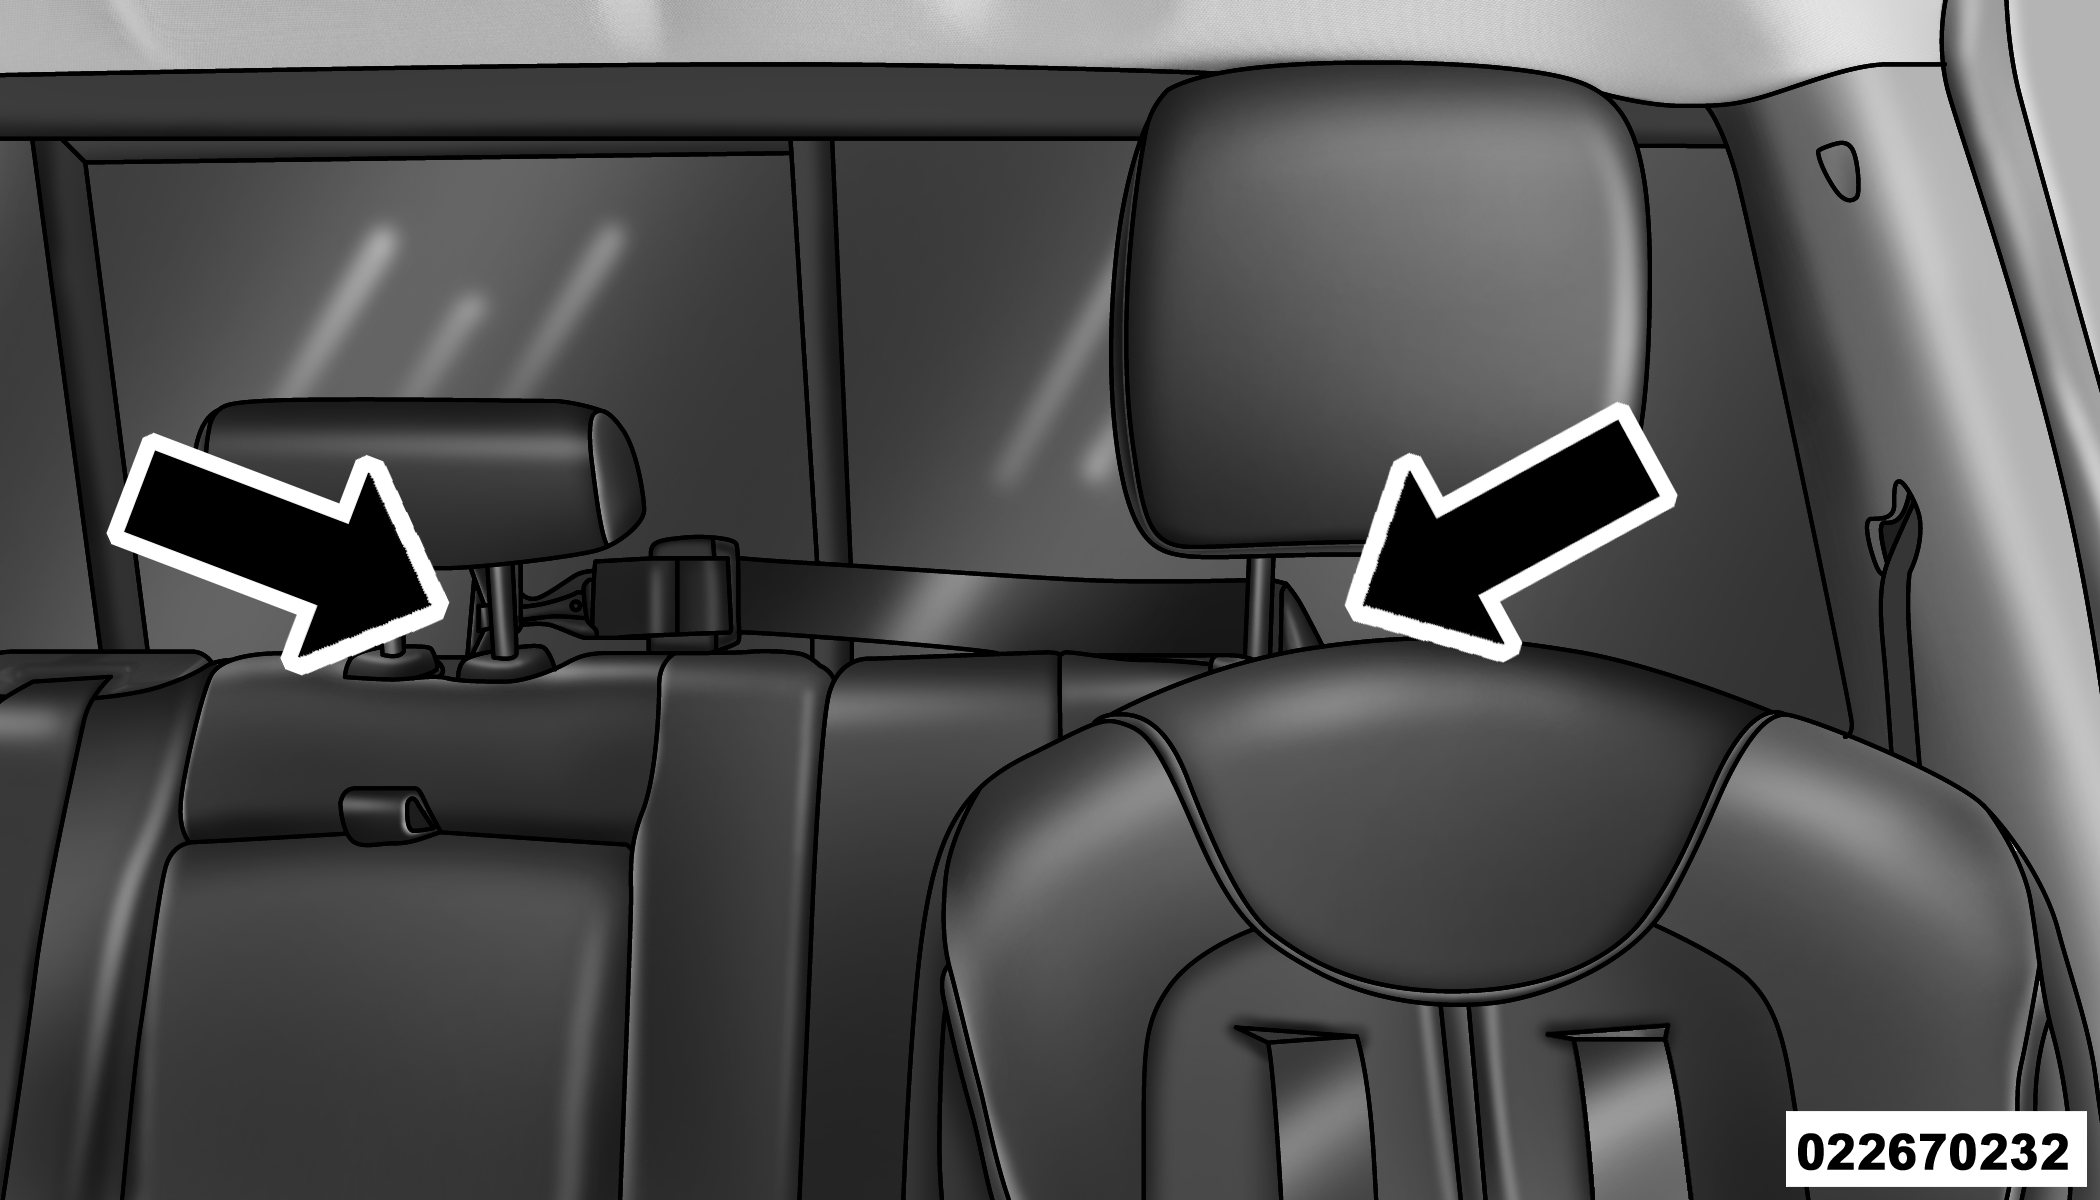 DODGE CHRYSLER Rear Seat Anchor Cover Set Of 3 NEW OEM MOPAR 